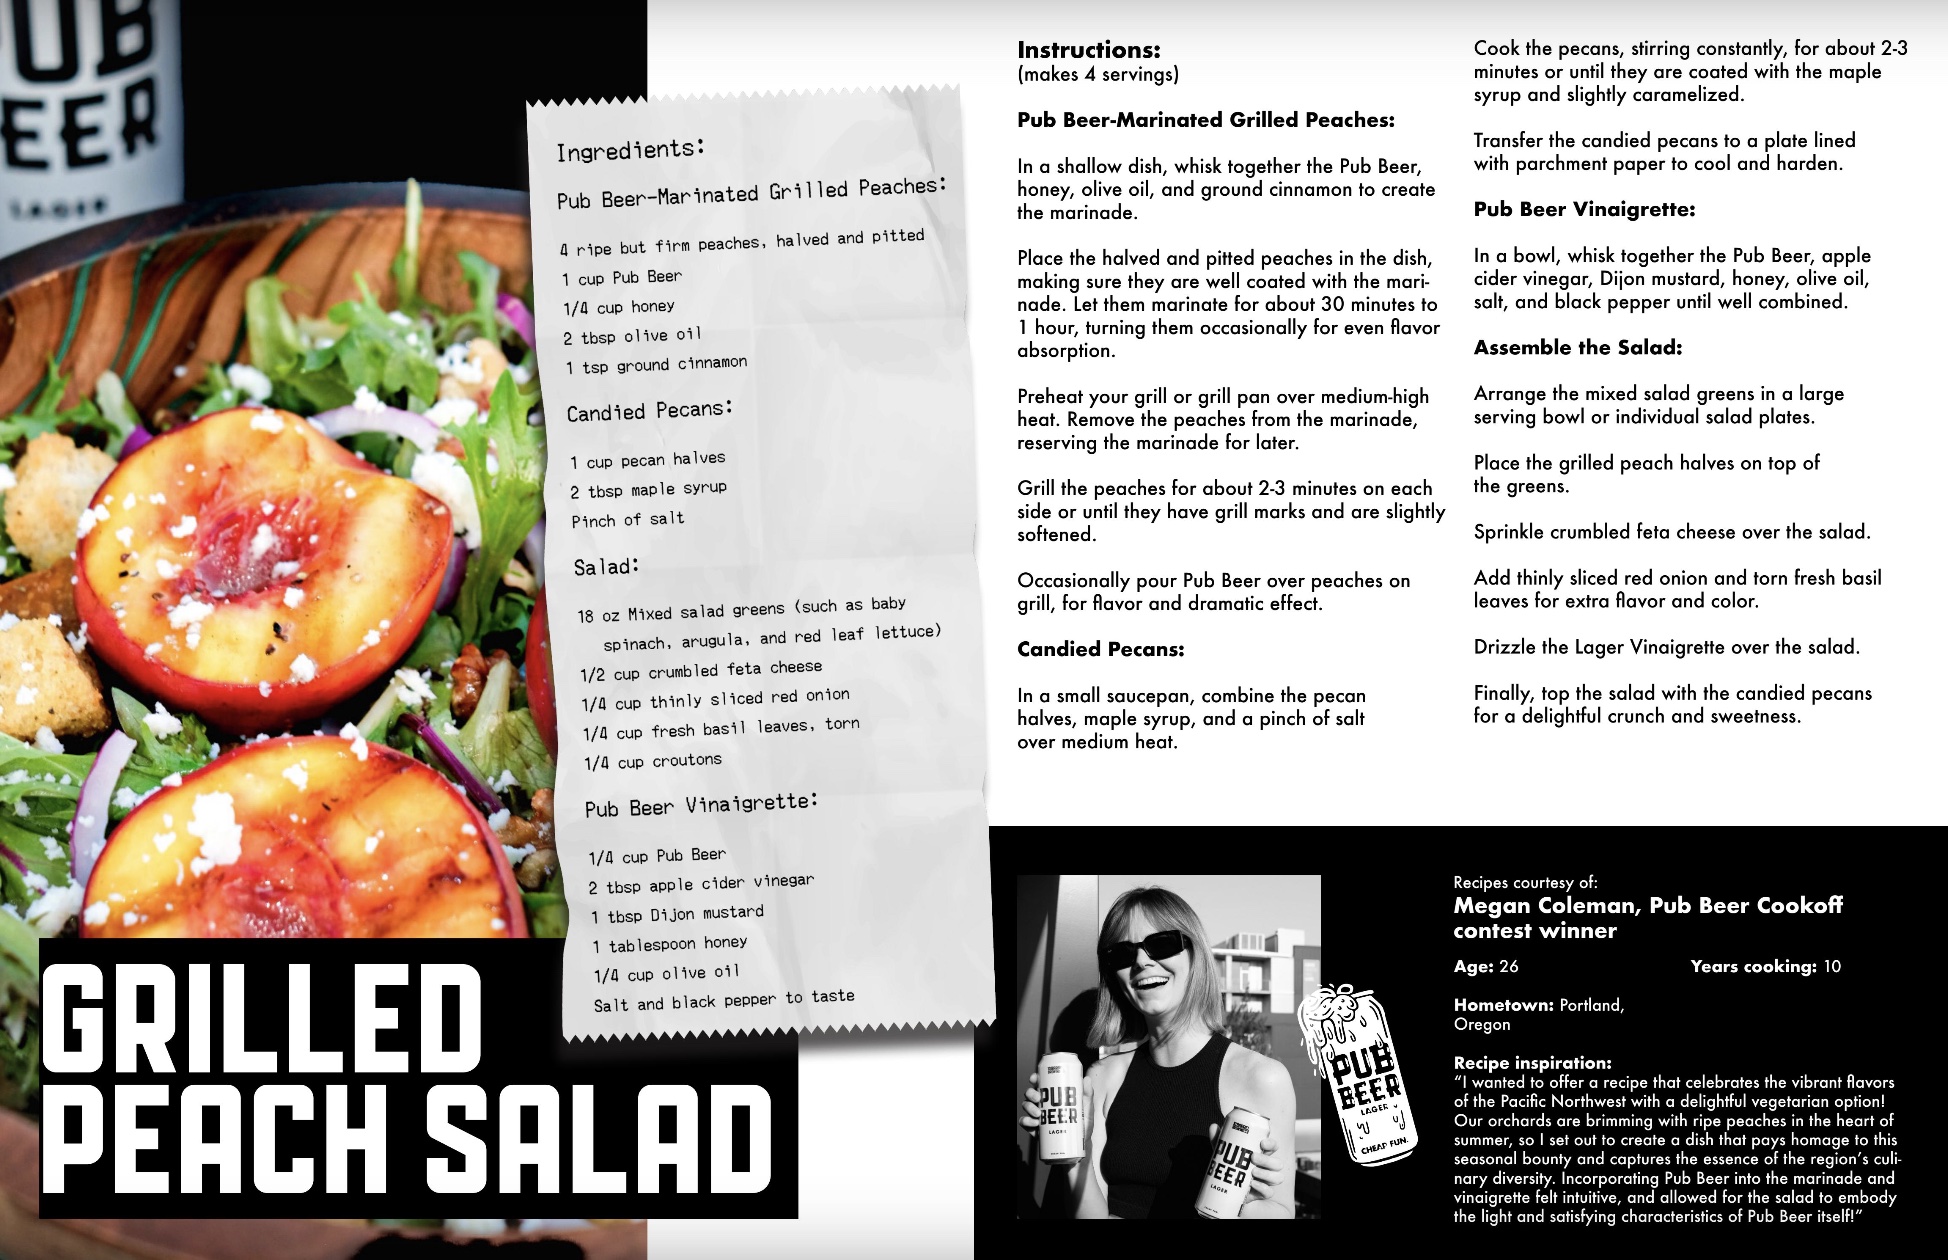 10 Barrel Brewing Pub Beer Cookbook - Grilled Peach Salad Recipe from Megan Coleman, the Pub Beer Cookoff contest winner!